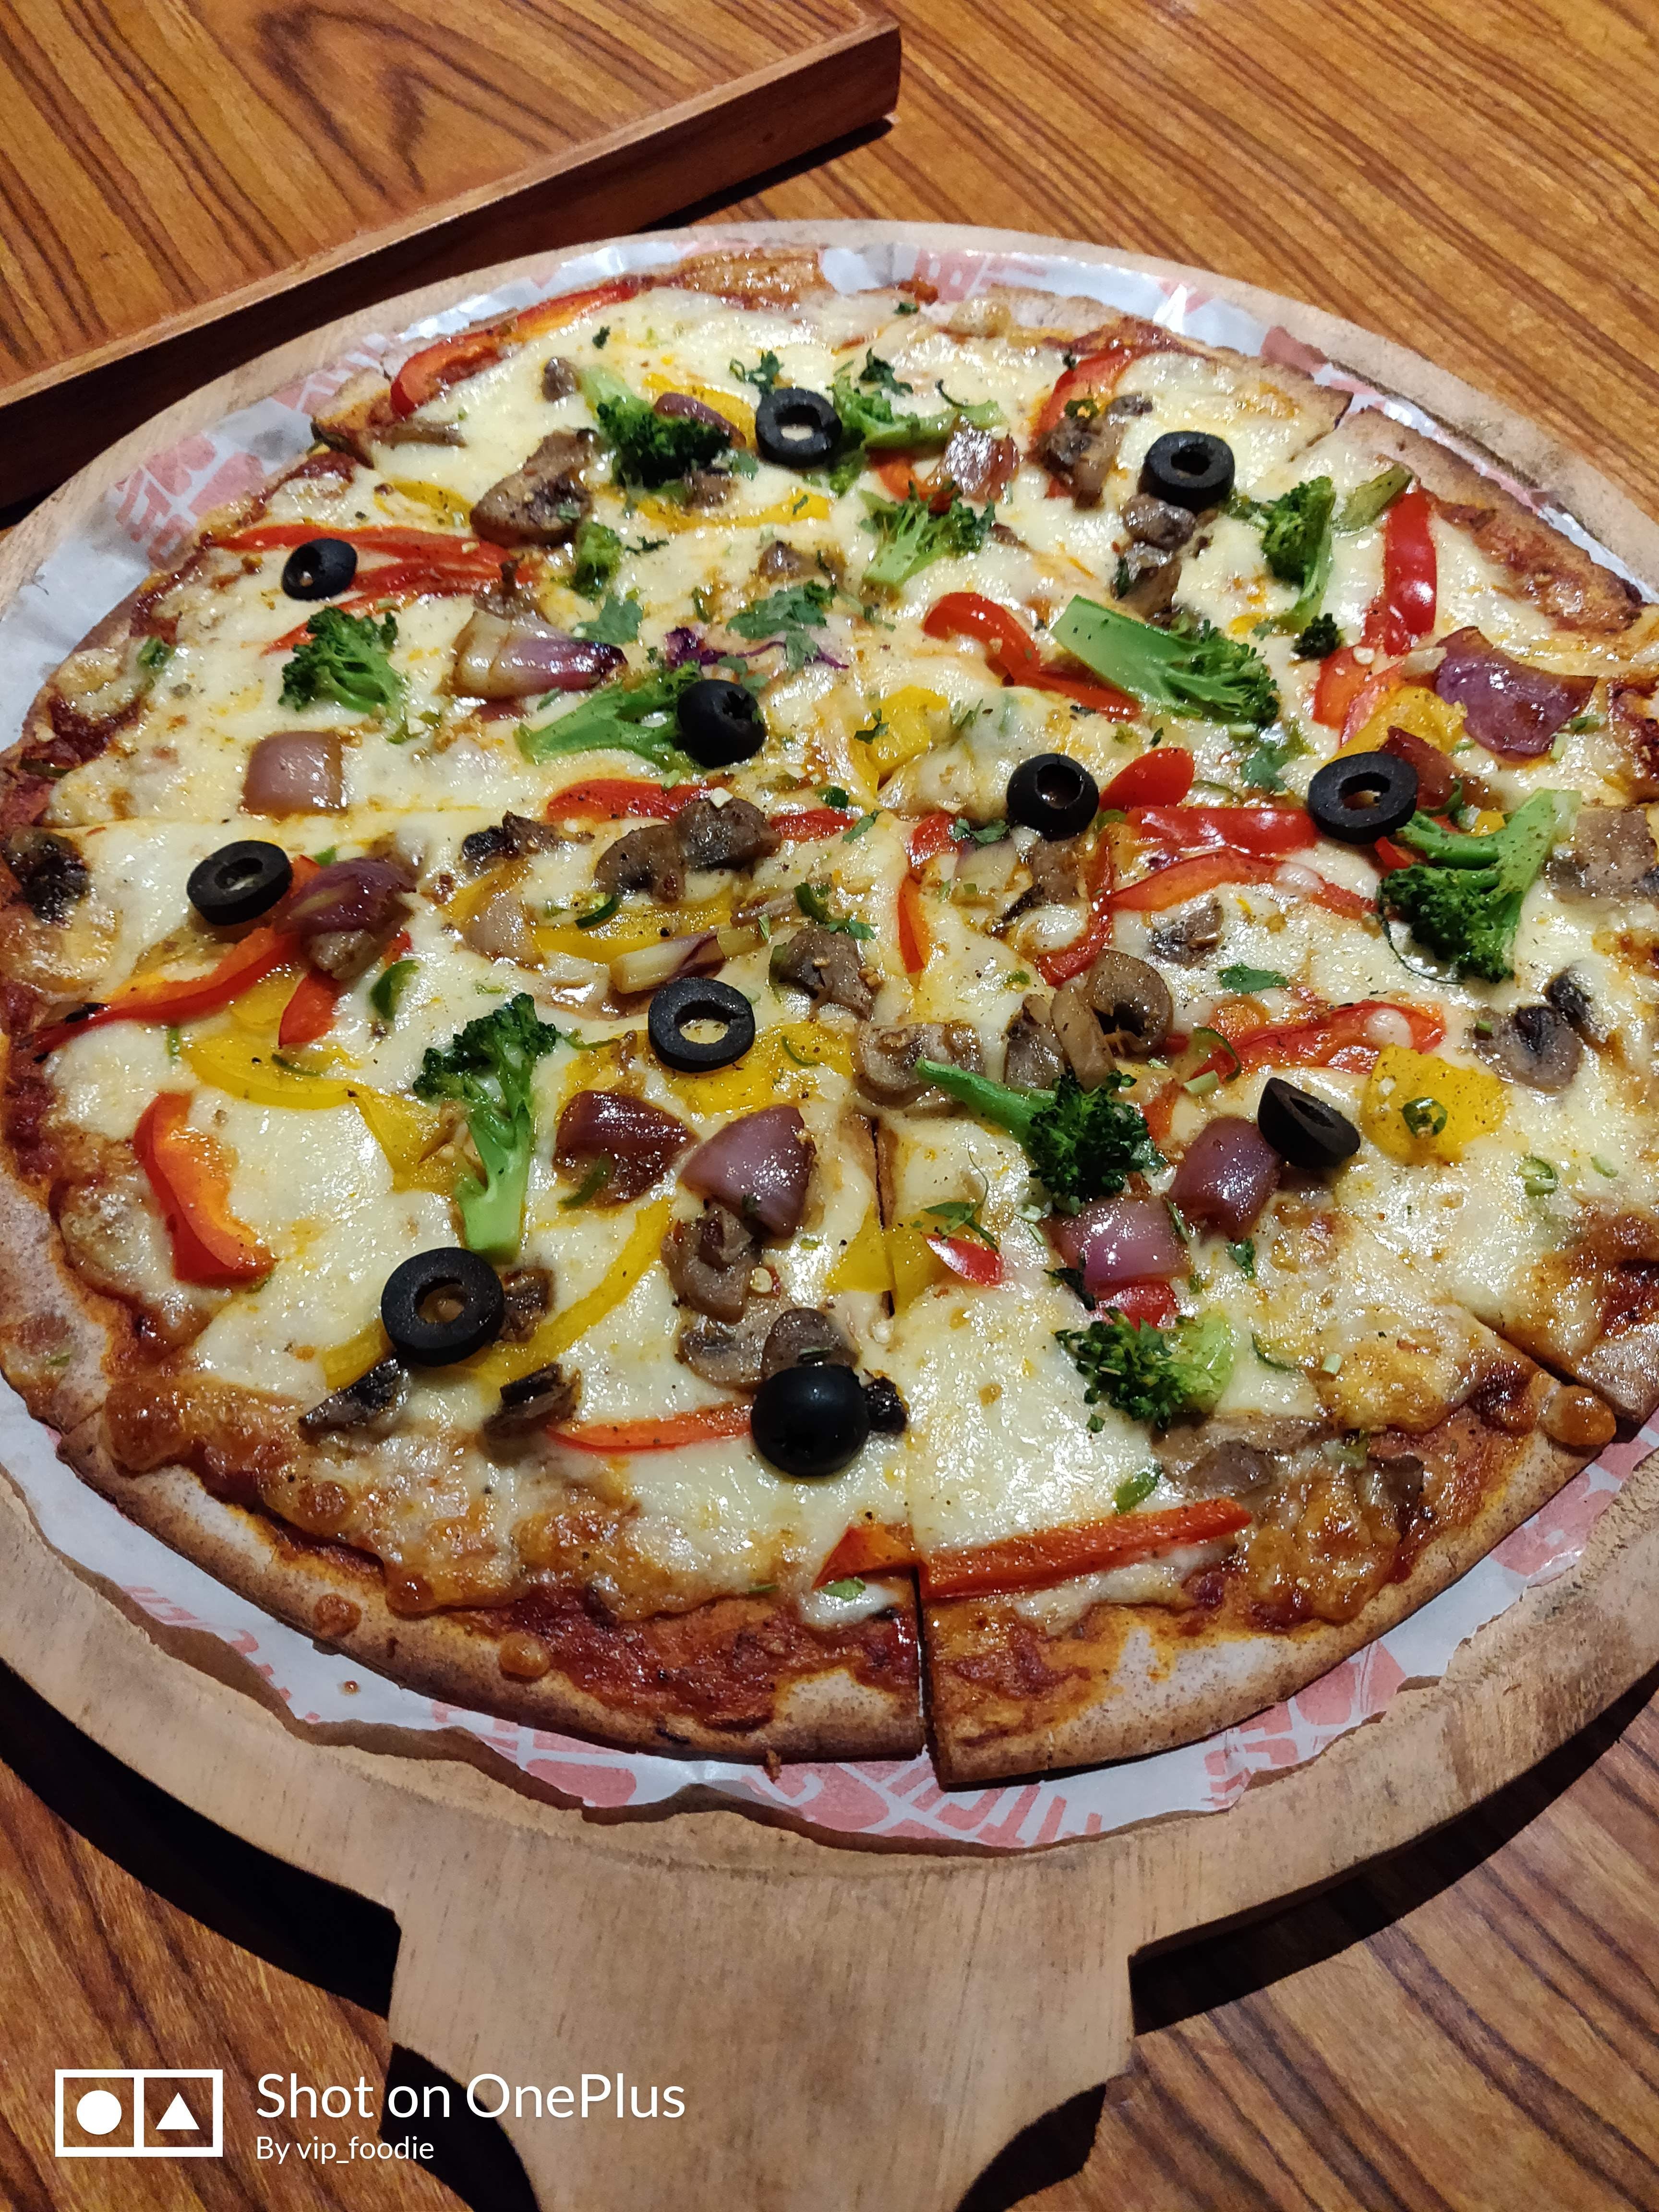 Dish,Food,Pizza,Cuisine,Pizza cheese,Ingredient,California-style pizza,Flatbread,Recipe,Italian food